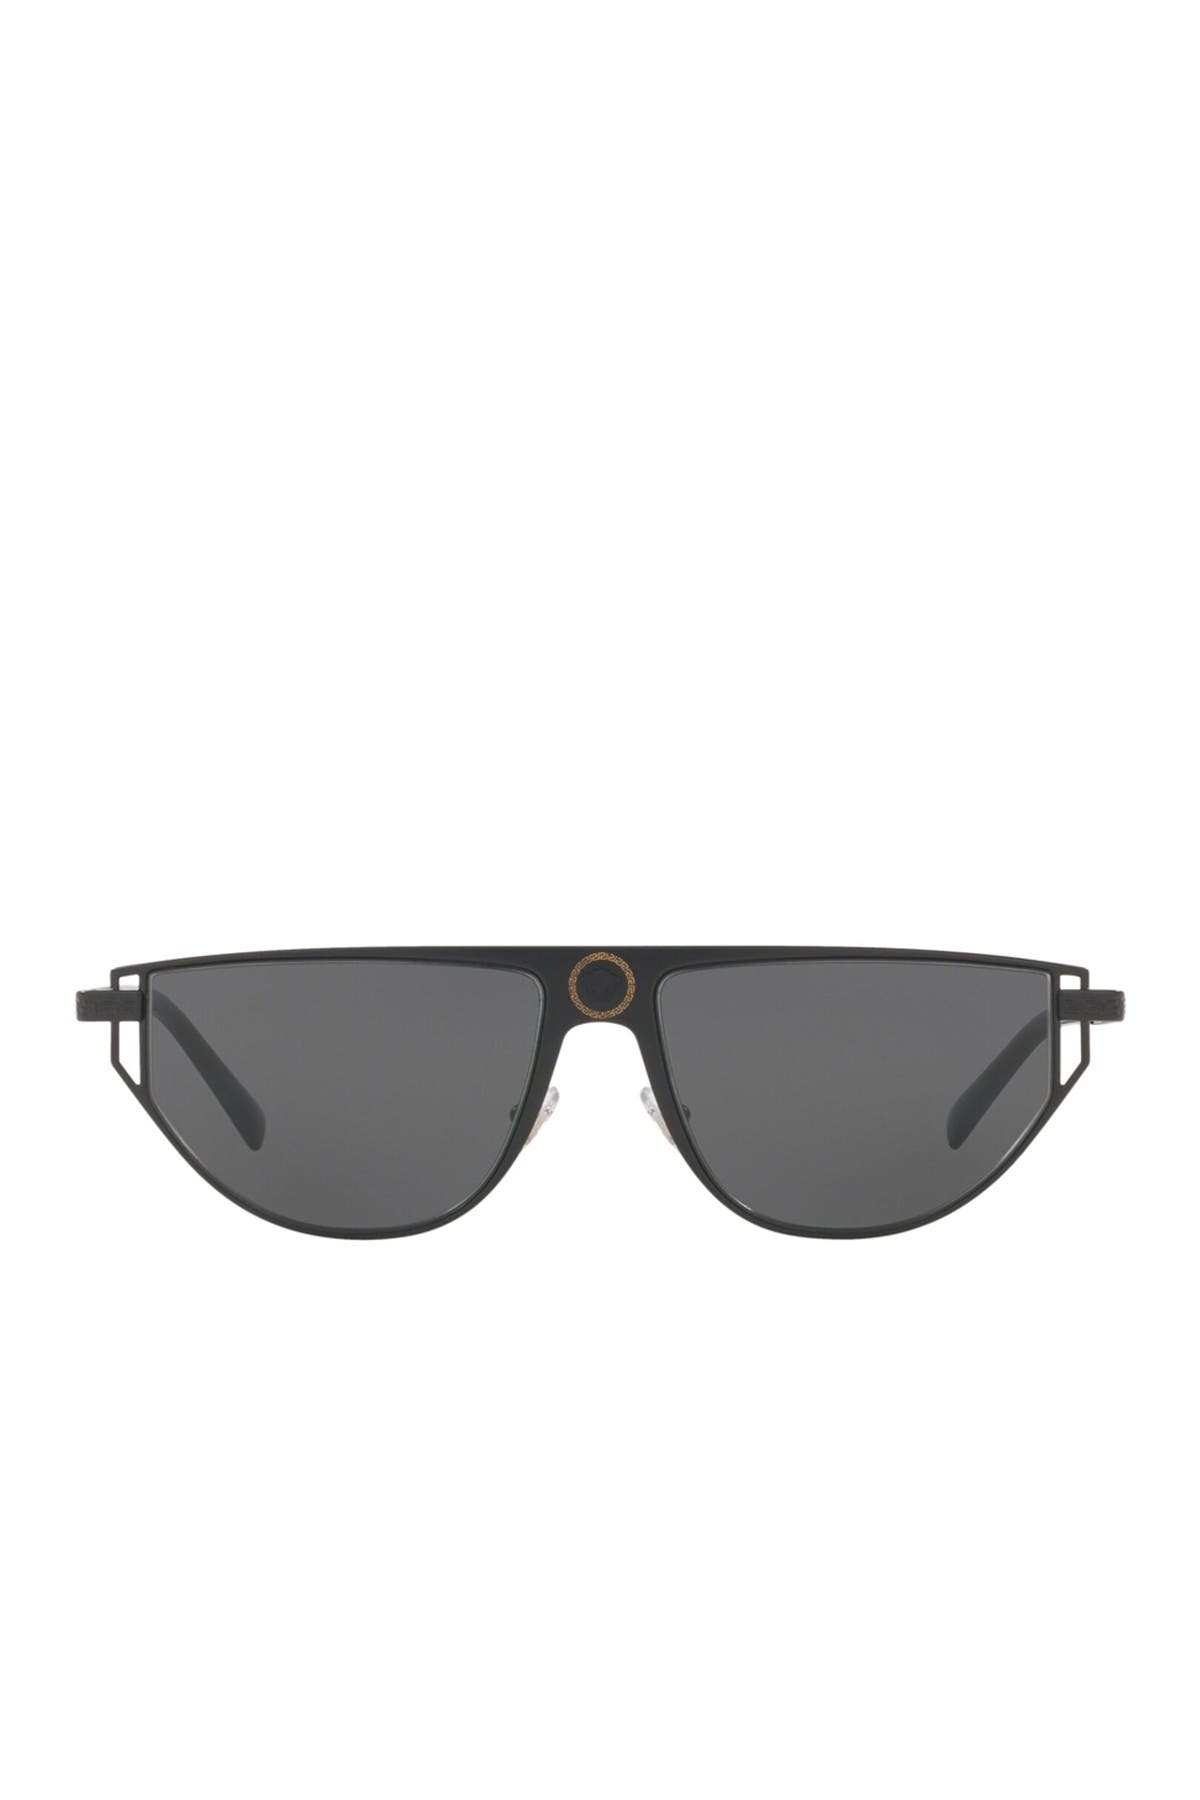 versace flat top sunglasses